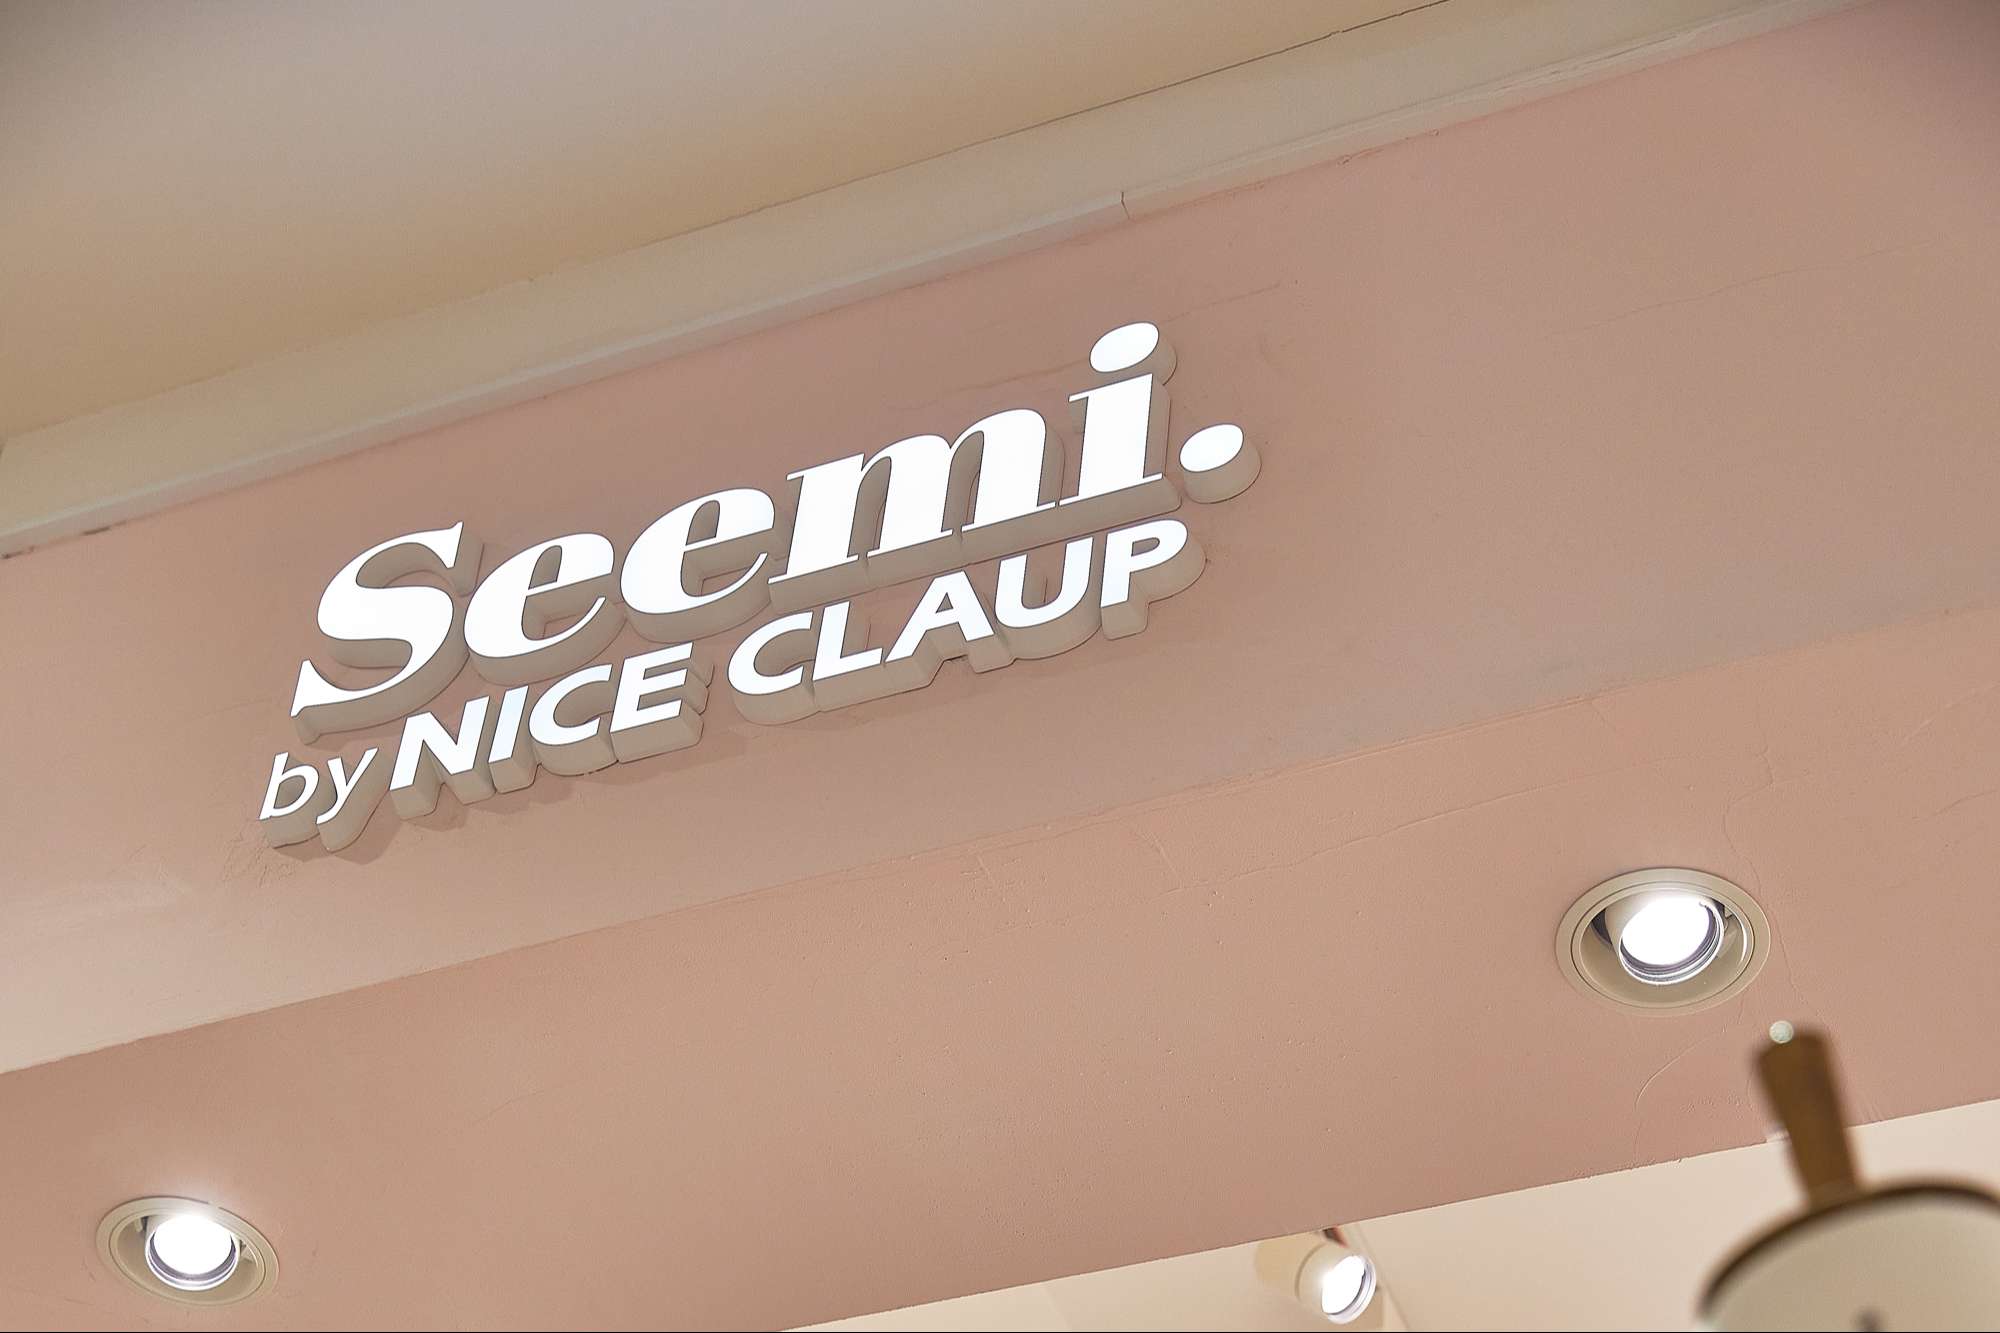 Seemi. by NICE CLAUP ルクア大阪店の実績写真